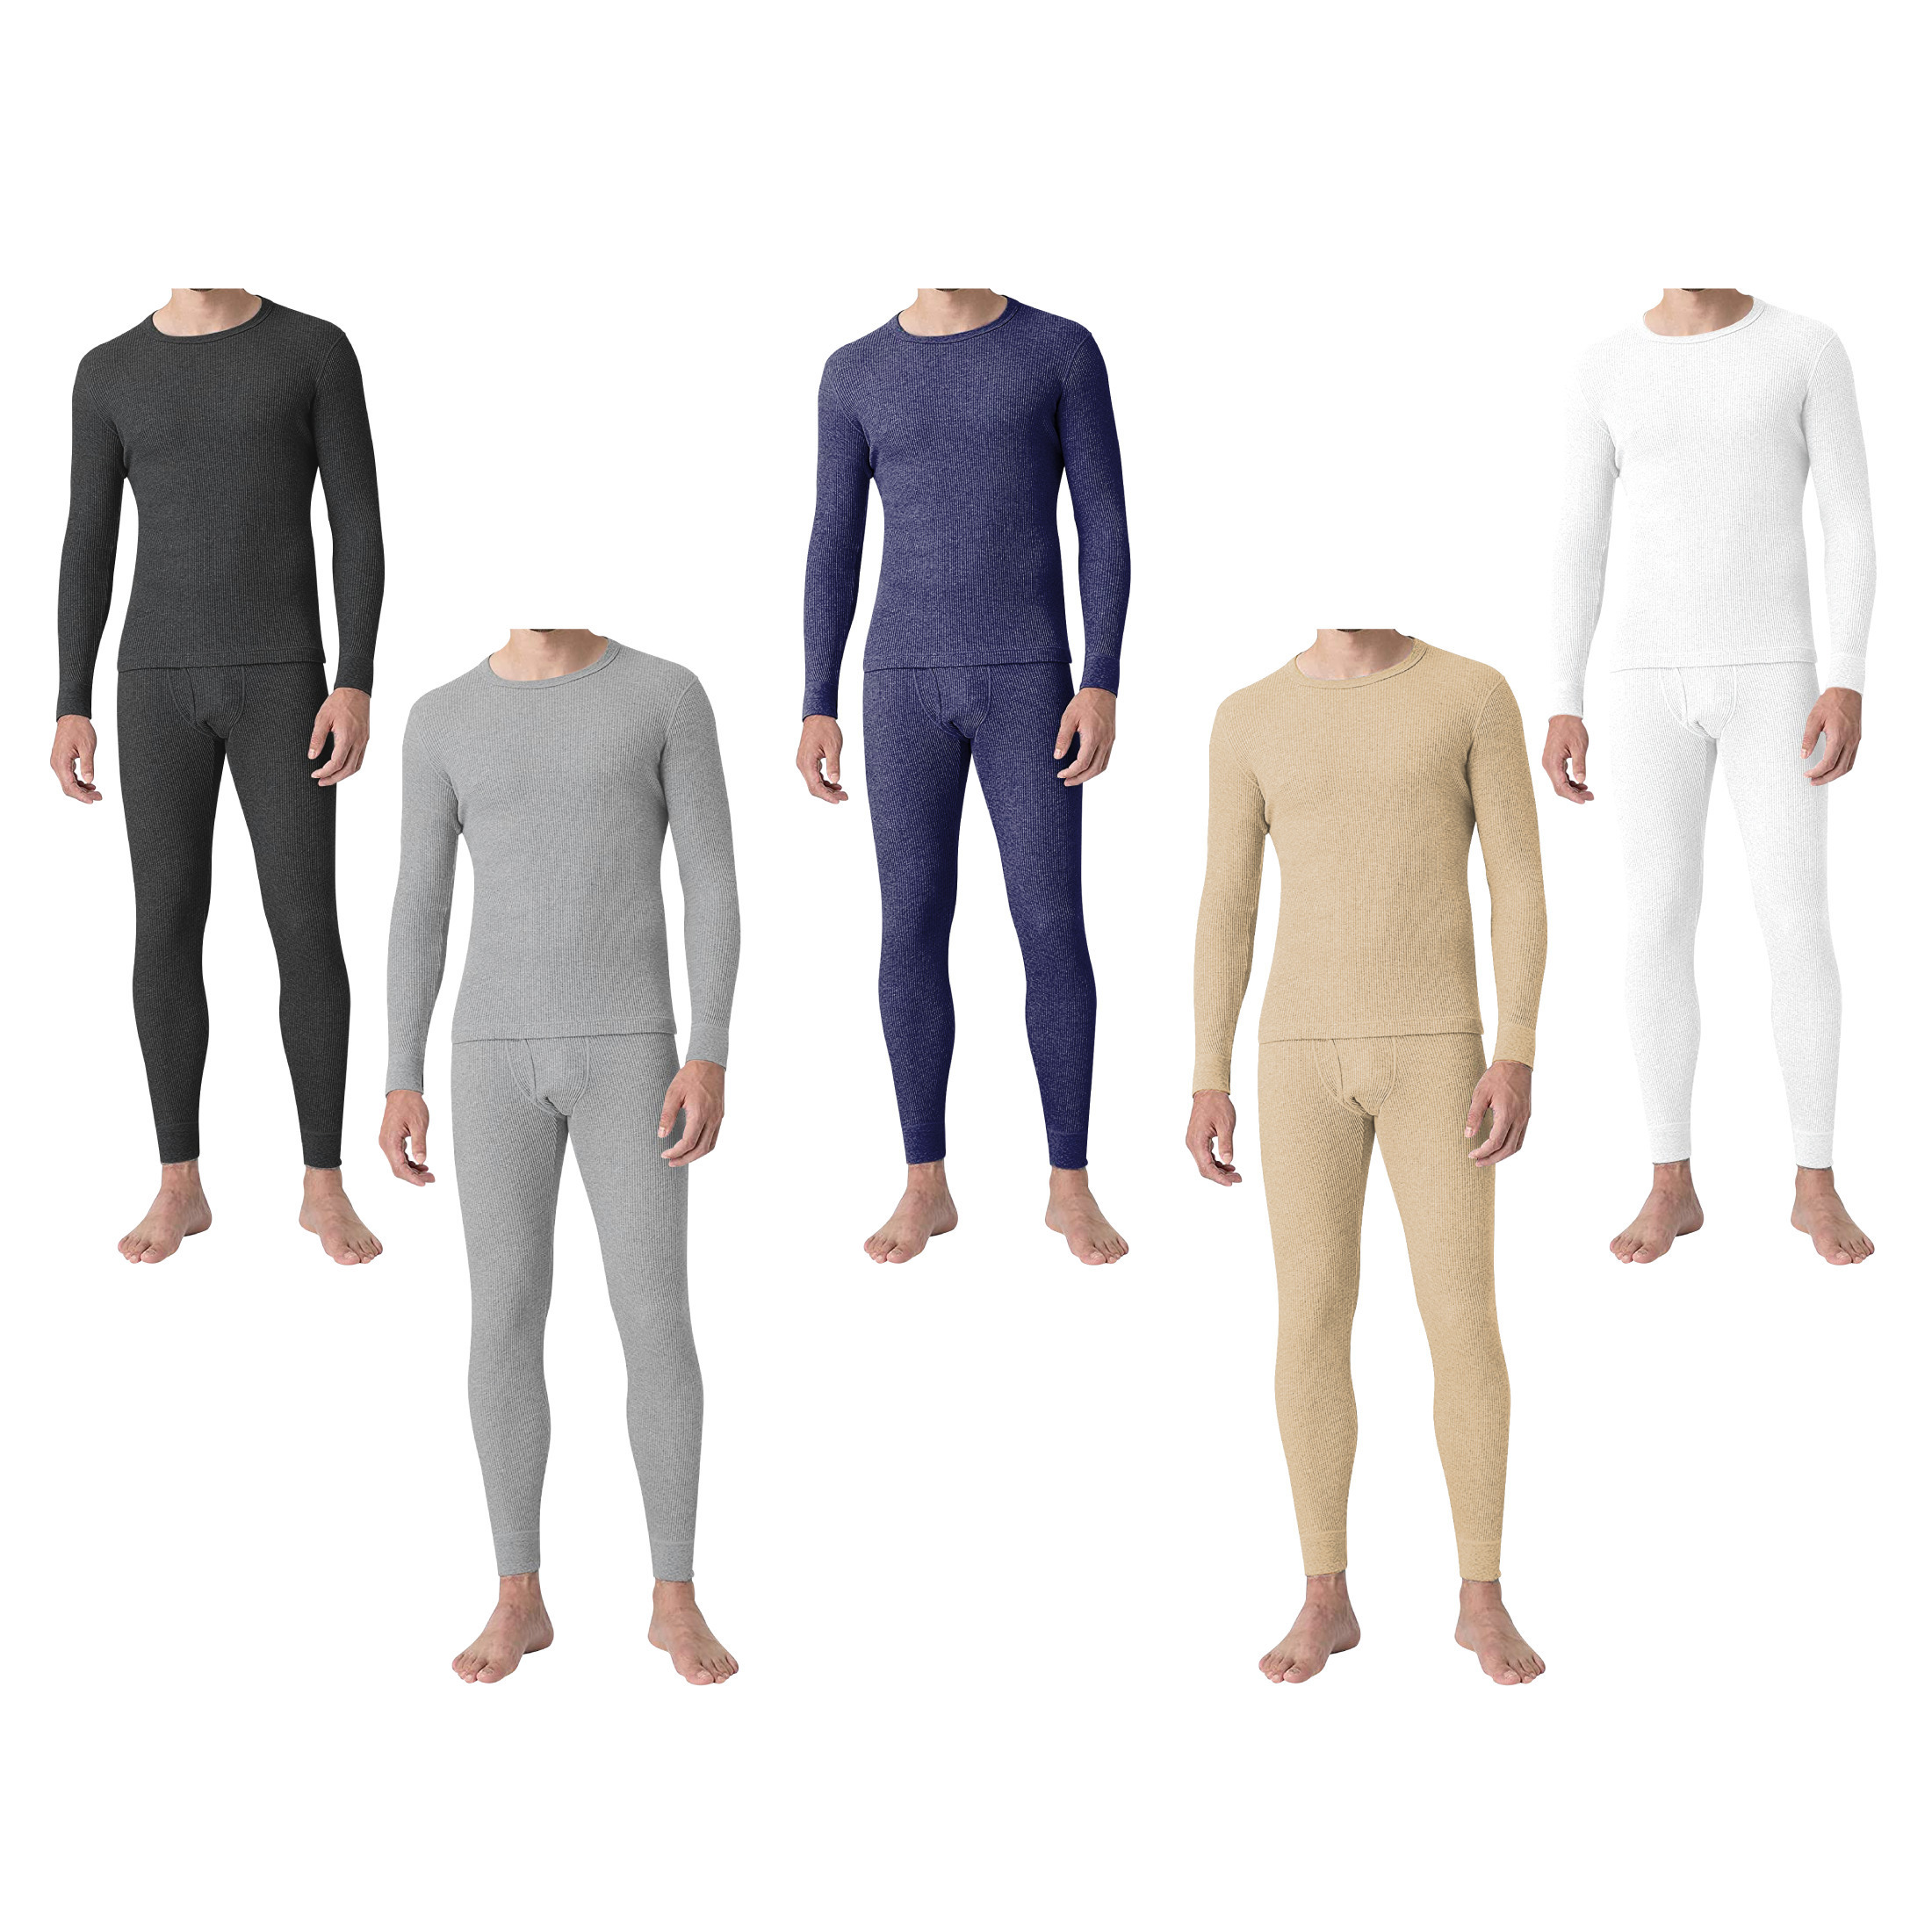 2-Sets: Men's Super Soft Cotton Waffle Knit Winter Thermal Underwear Set - Grey & Navy, Medium